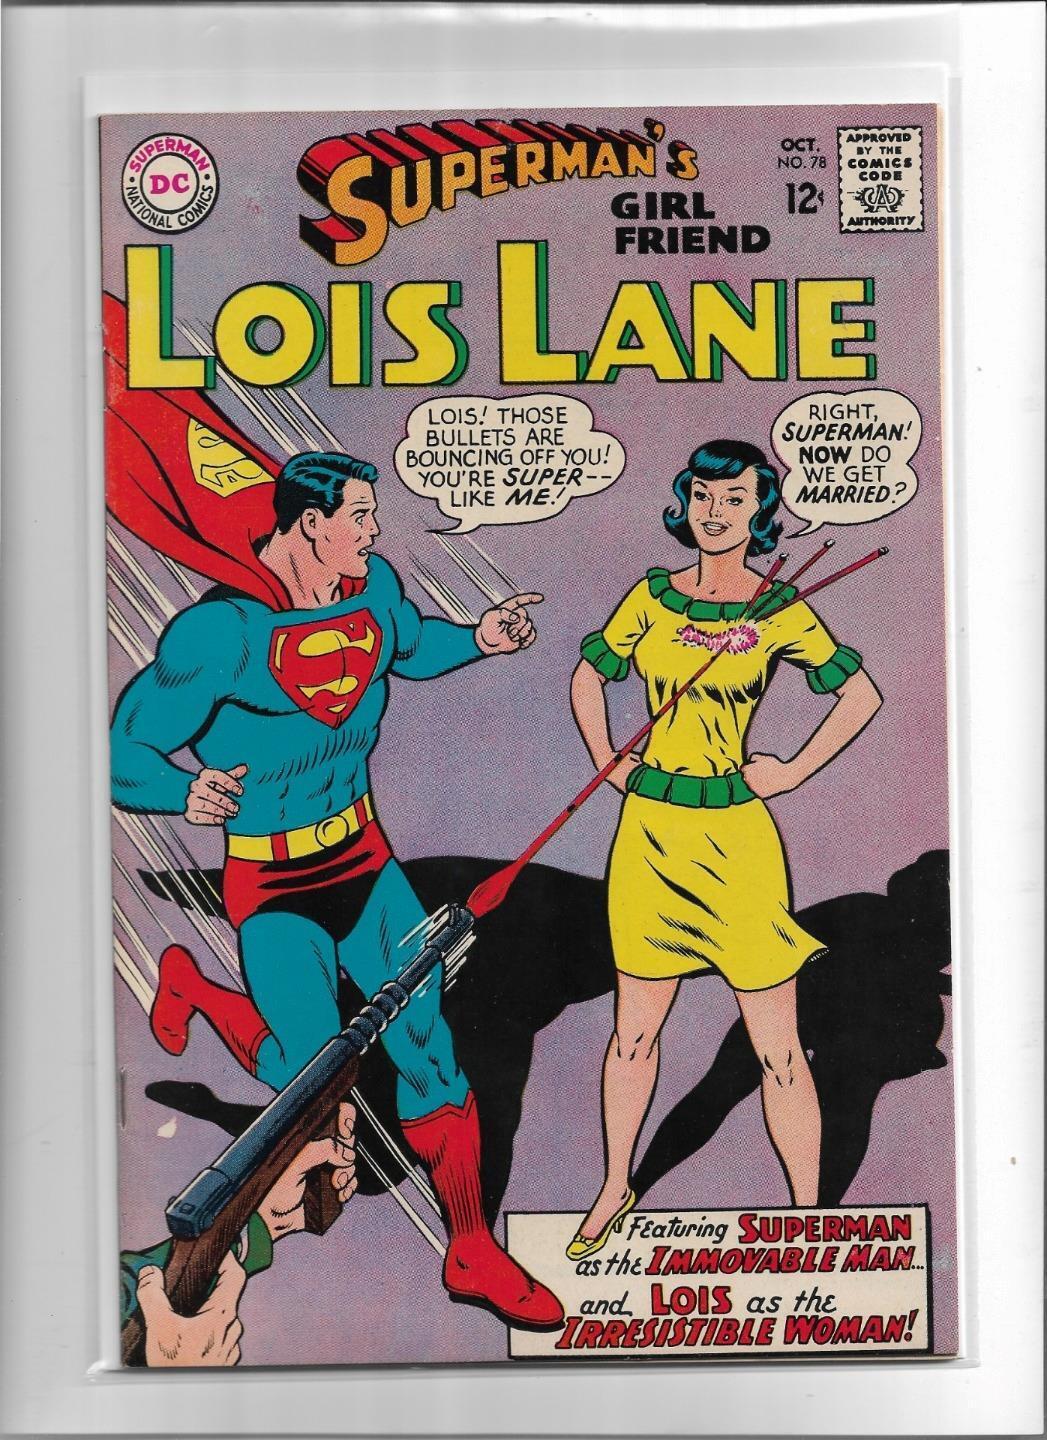 SUPERMAN'S GIRL FRIEND, LOIS LANE #78 1967 VERY FINE+ 8.5 3878